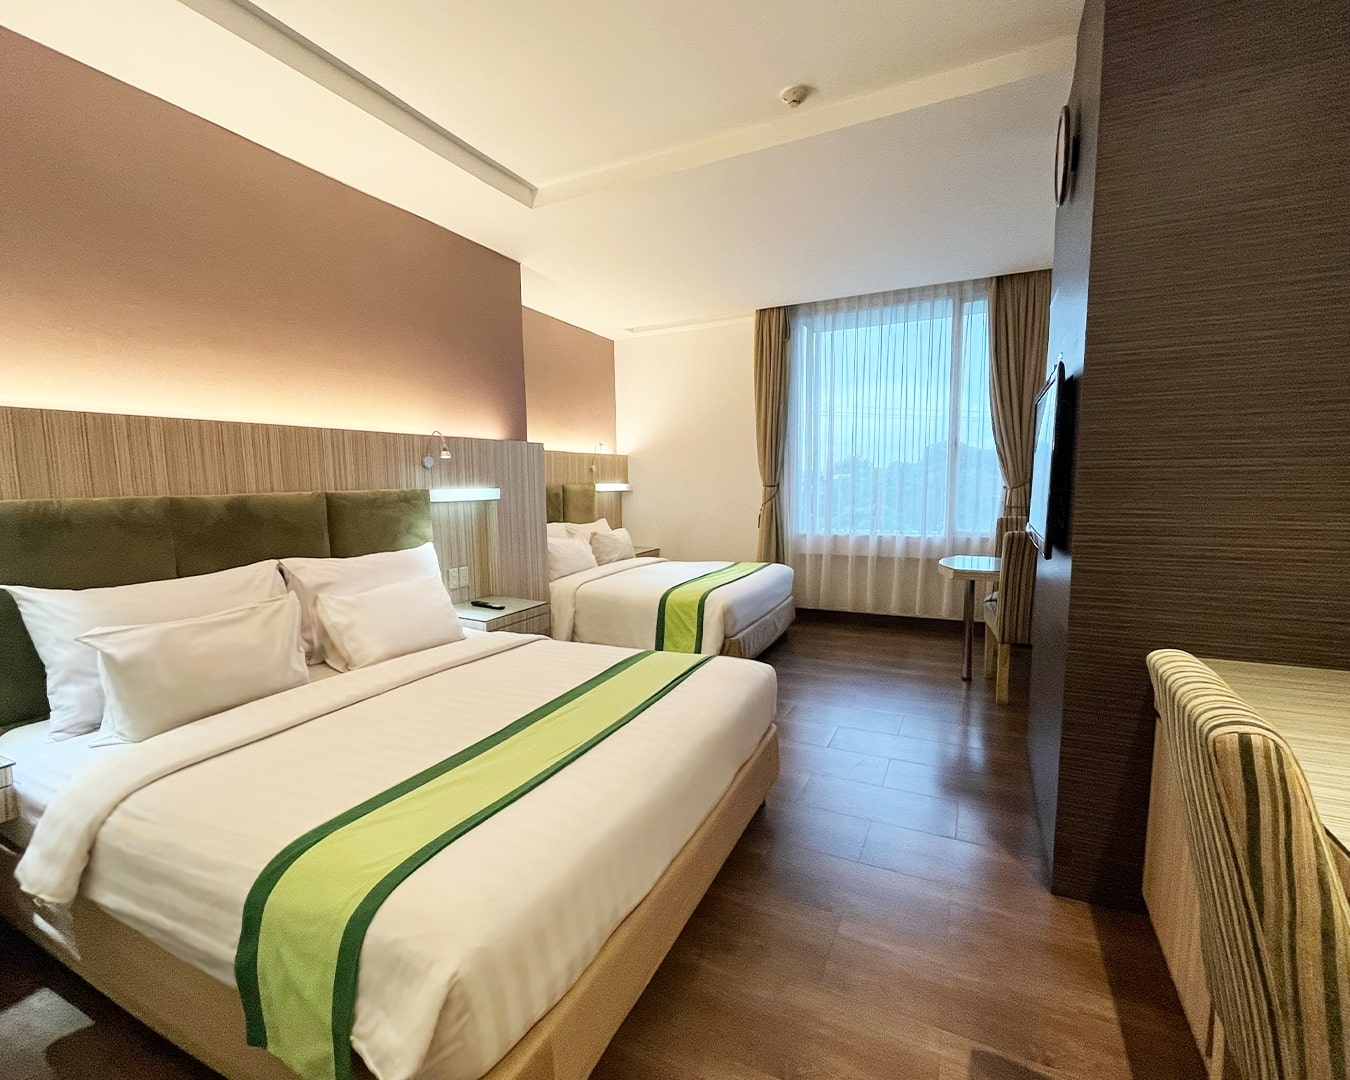 Bedroom 2, Hotel Wisata Niaga, Banyumas